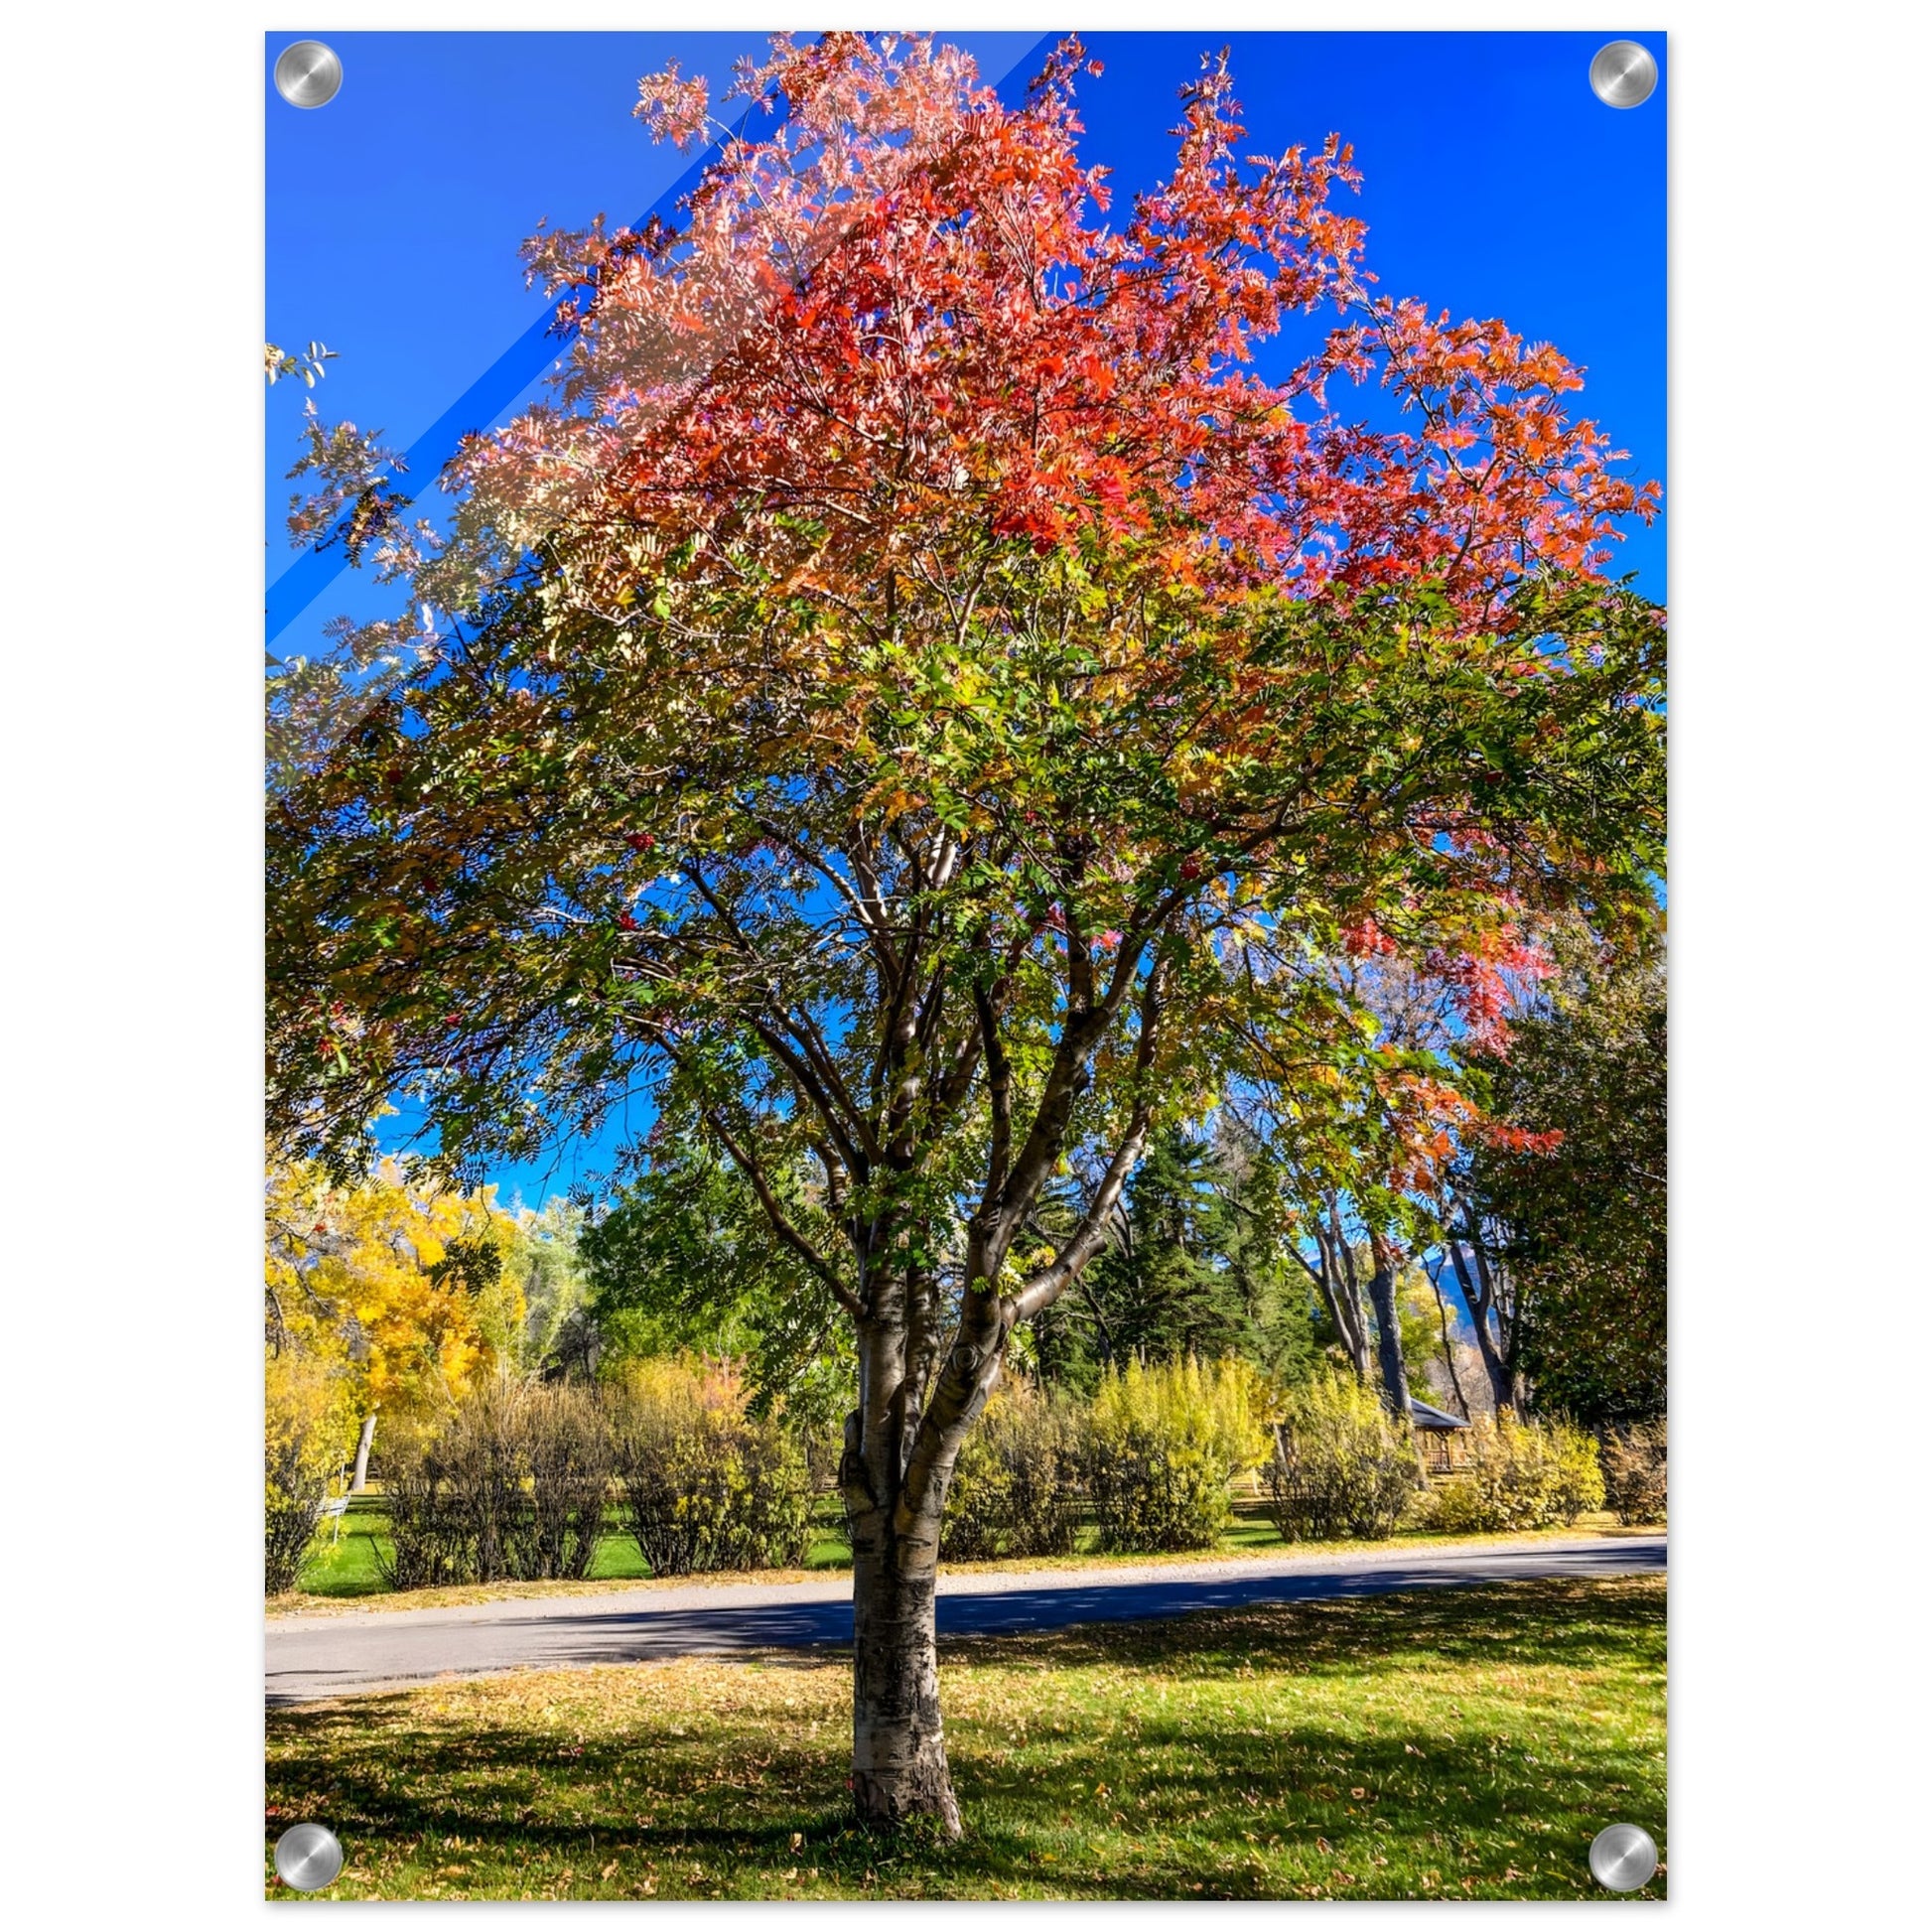 Prism Amelanchier: An Autumn Amelanchier Tree in Montana Acrylic Print. Original Photography by James Bonner.